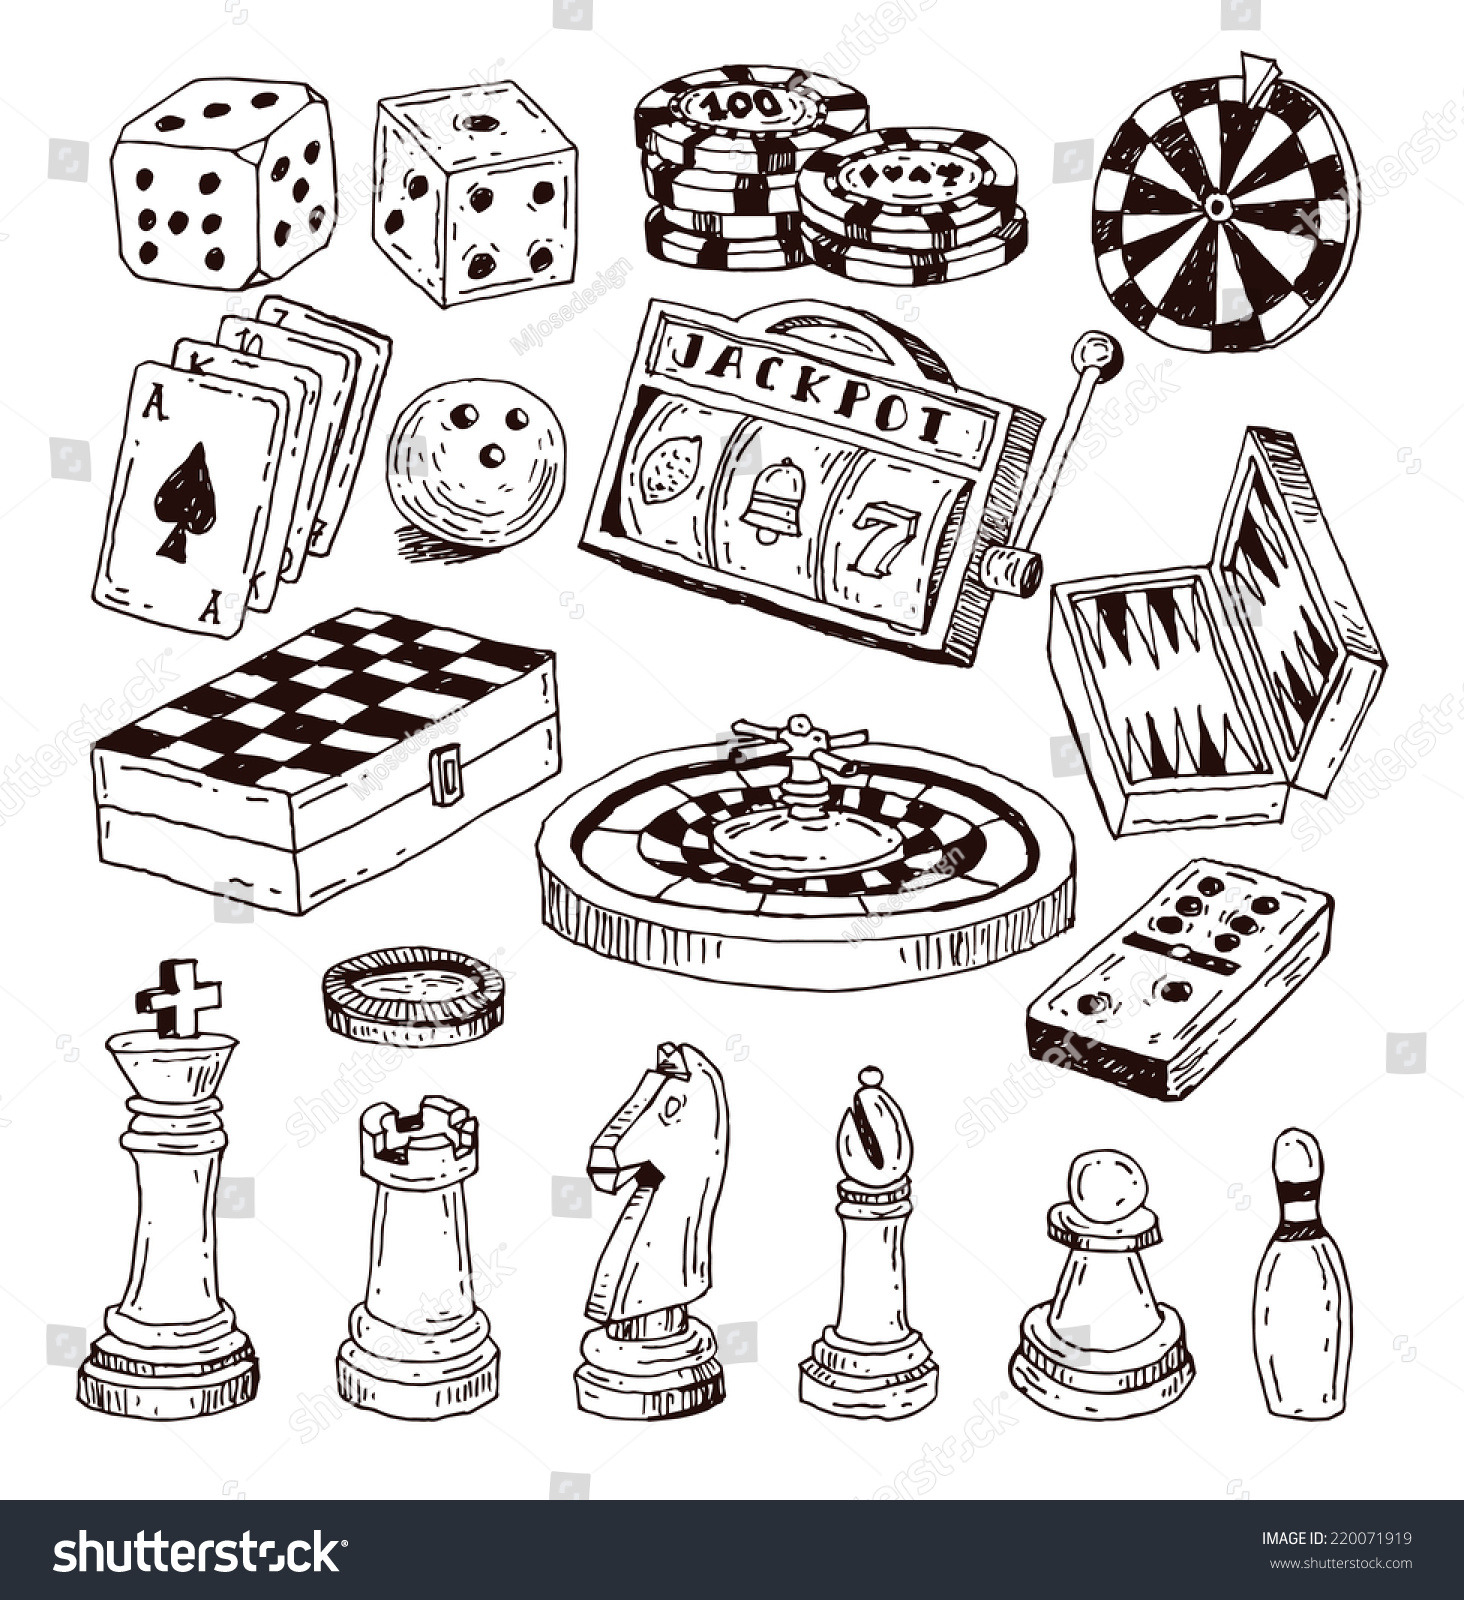 Chess Piece, Hand Drawn Vector Illustration. - 220071919 : Shutterstock